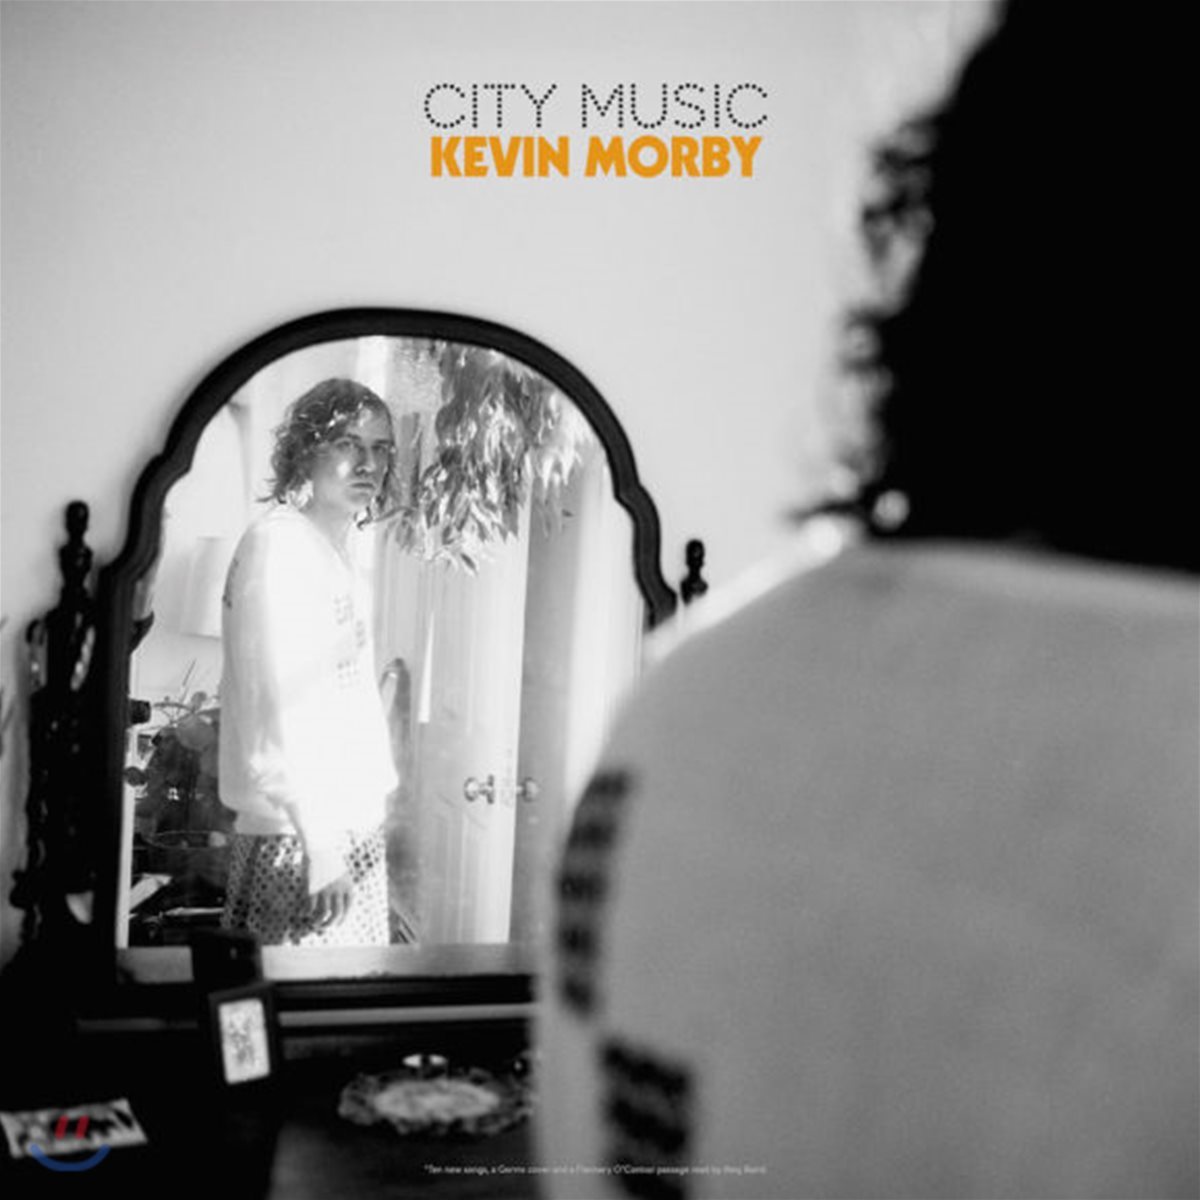 Kevin Morby (케빈 모비) - City Music